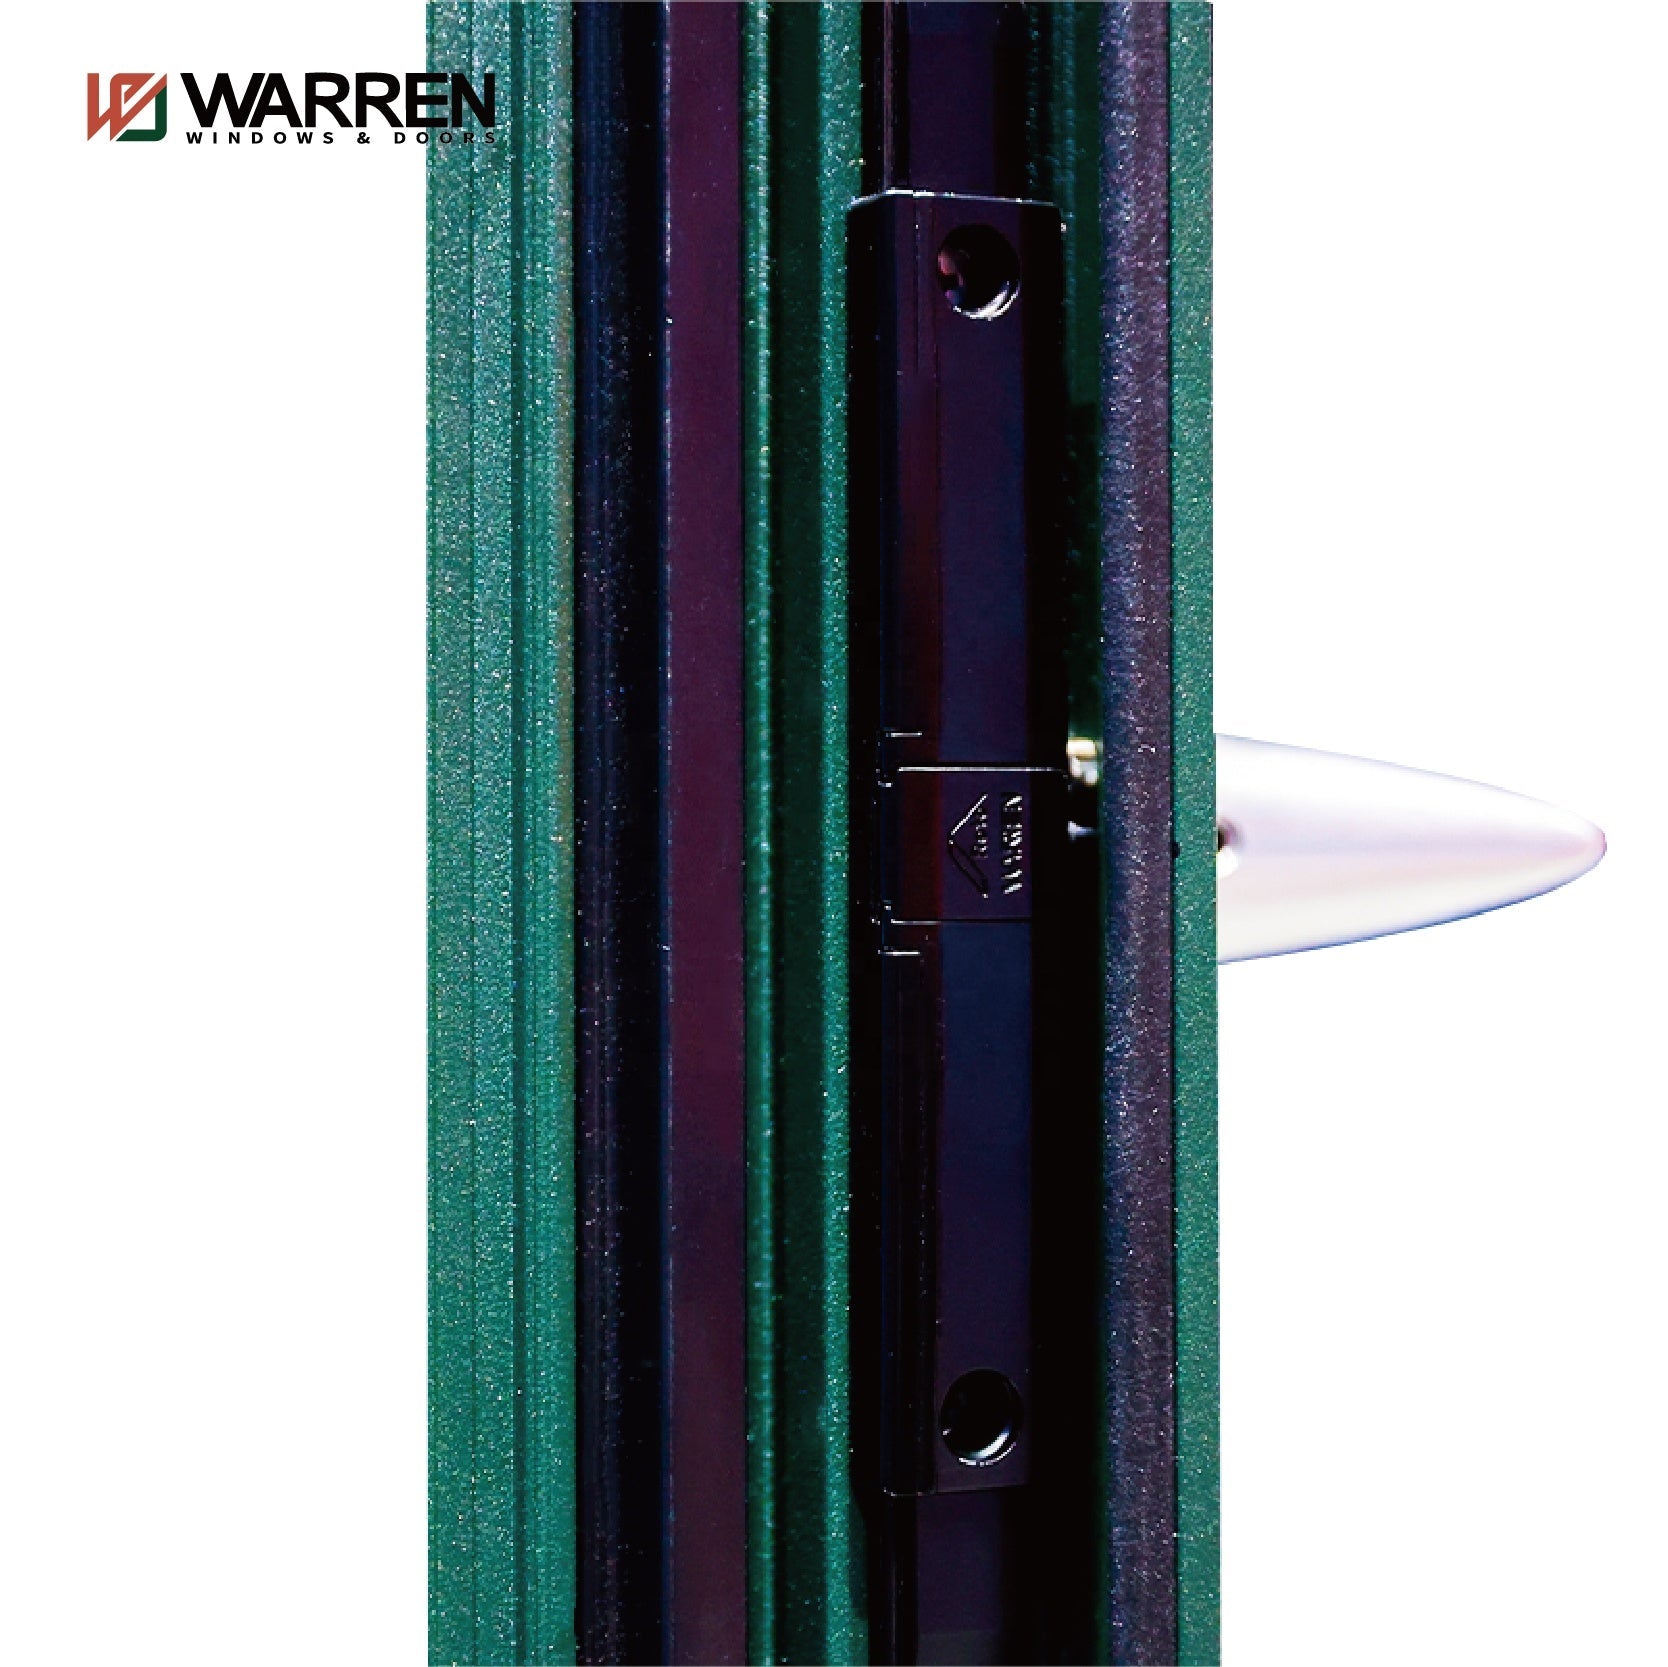 Warren 60x60 Window North American High Energy Saving Aluminum Impact Glass Windows Tilt And Turn Window